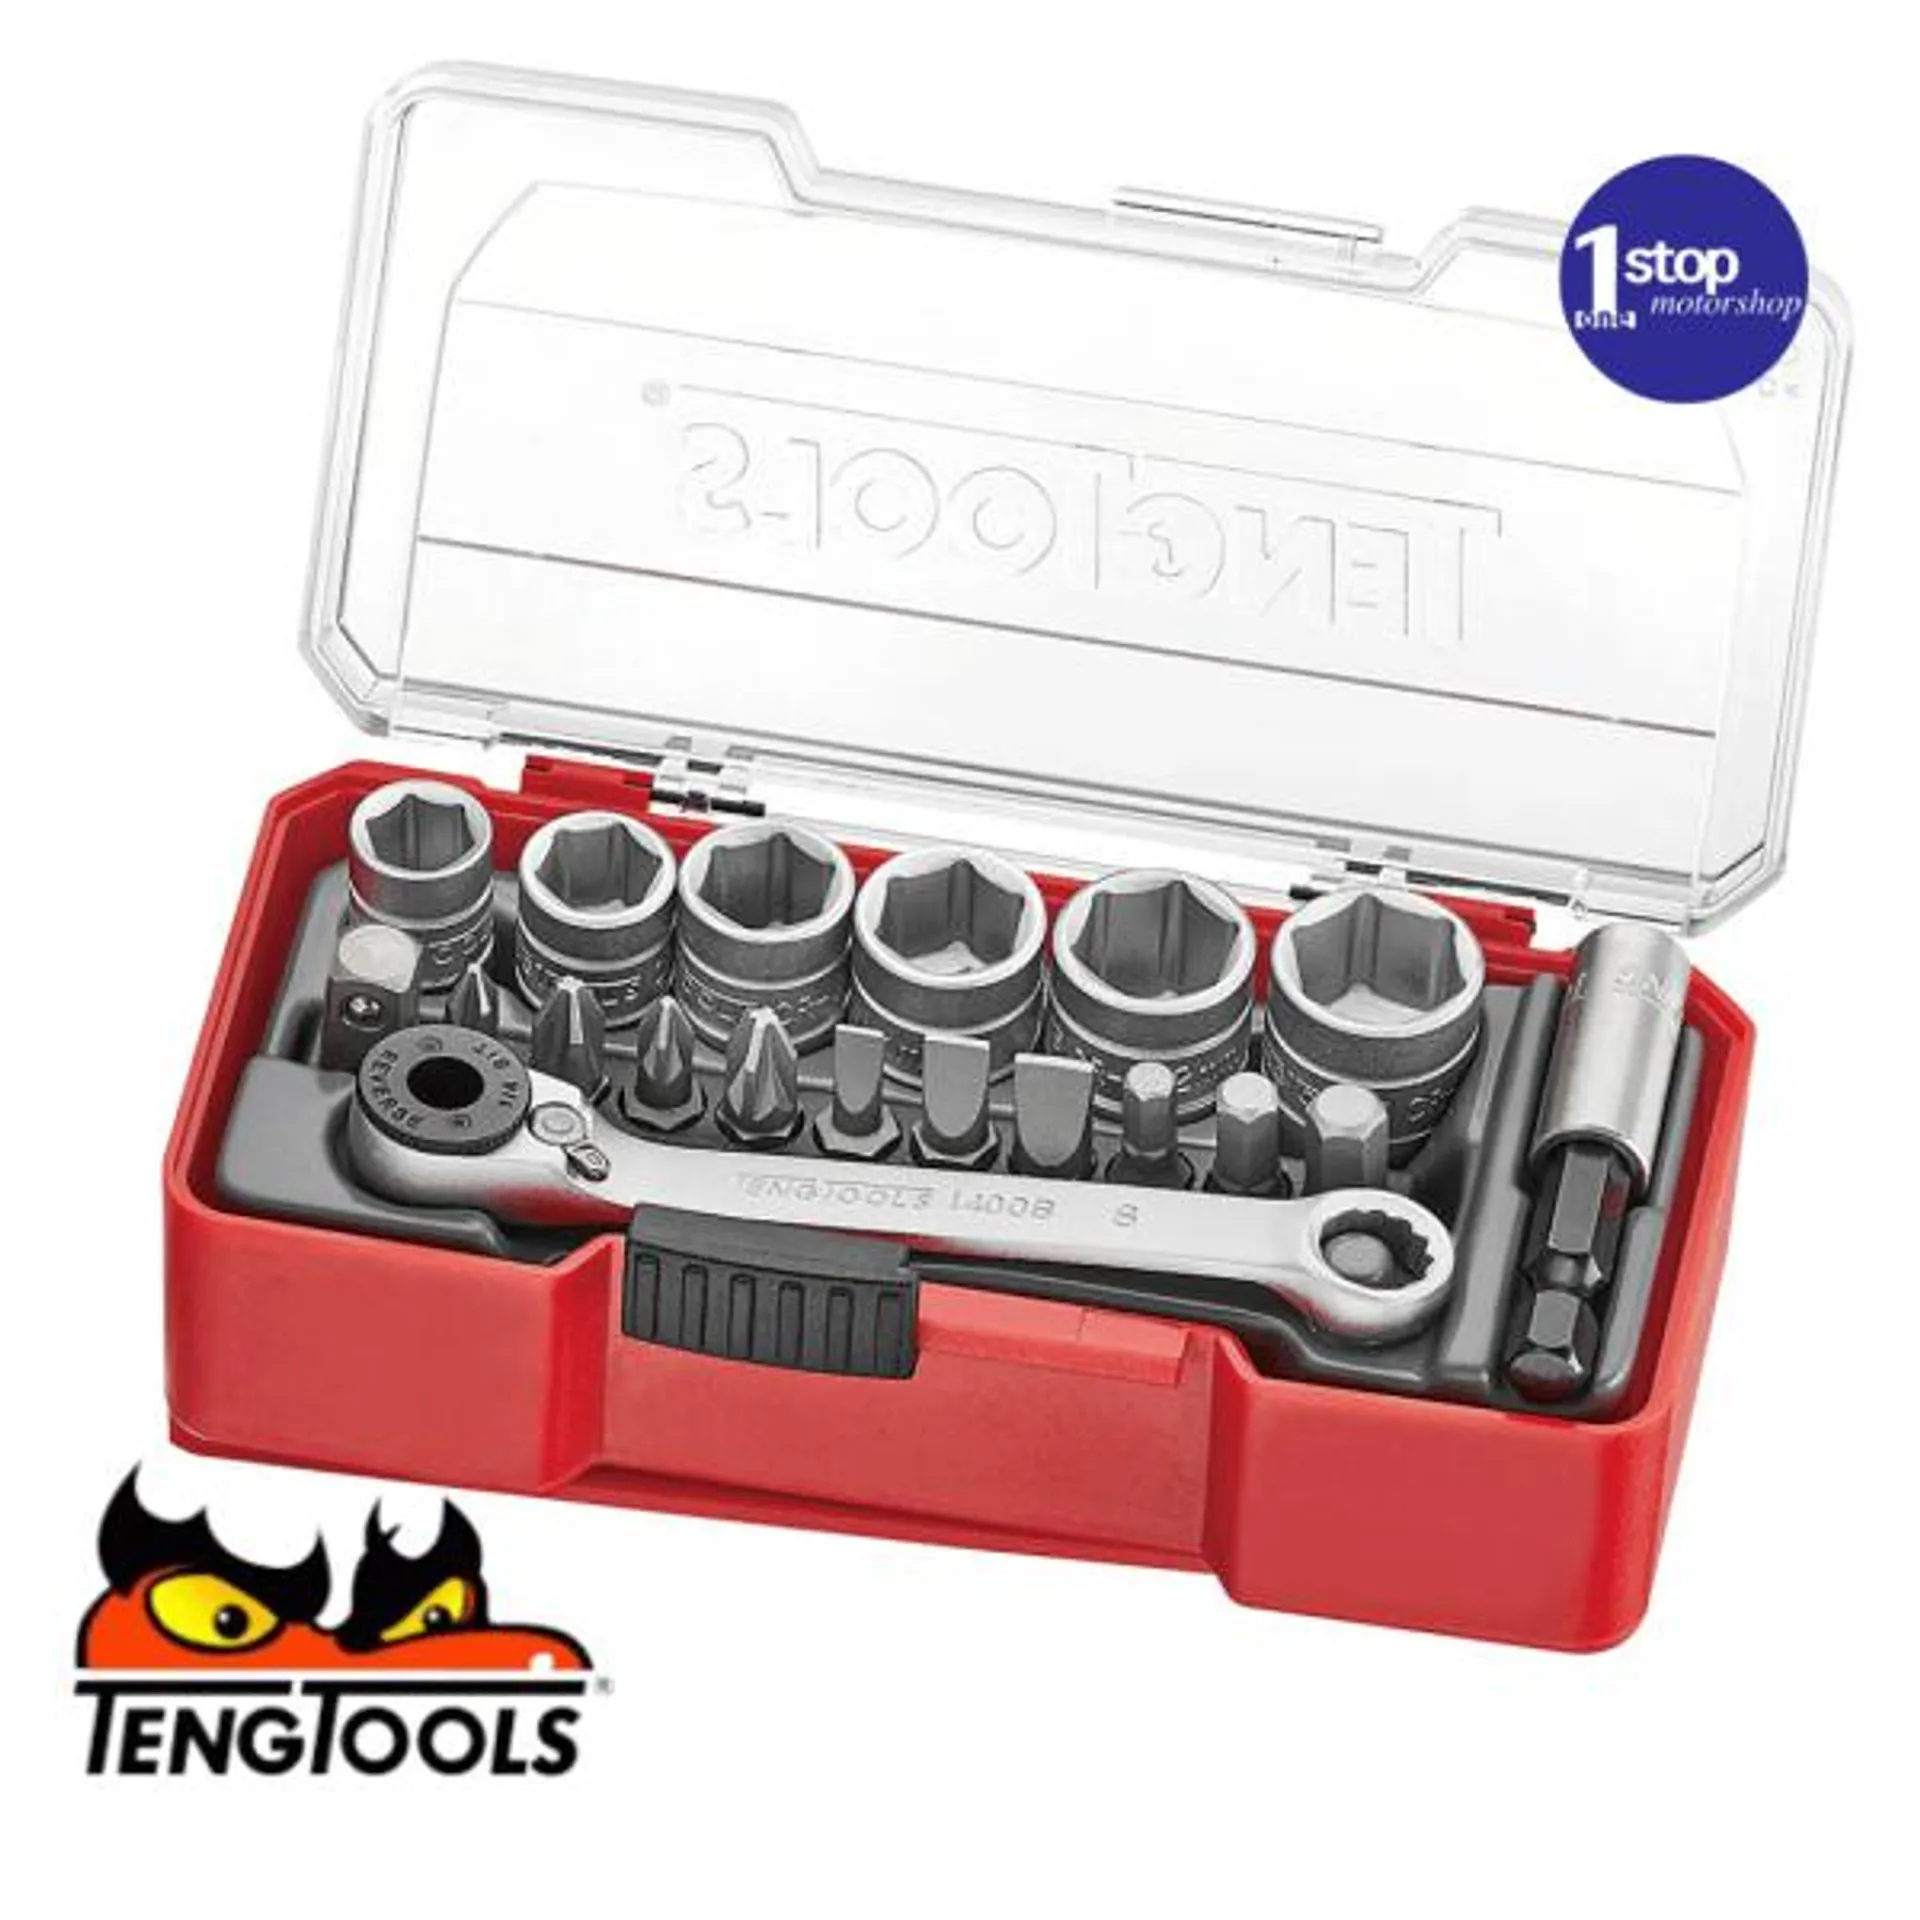 Teng Tools TJ1419 19 Piece 1/4 drive TJ socket set